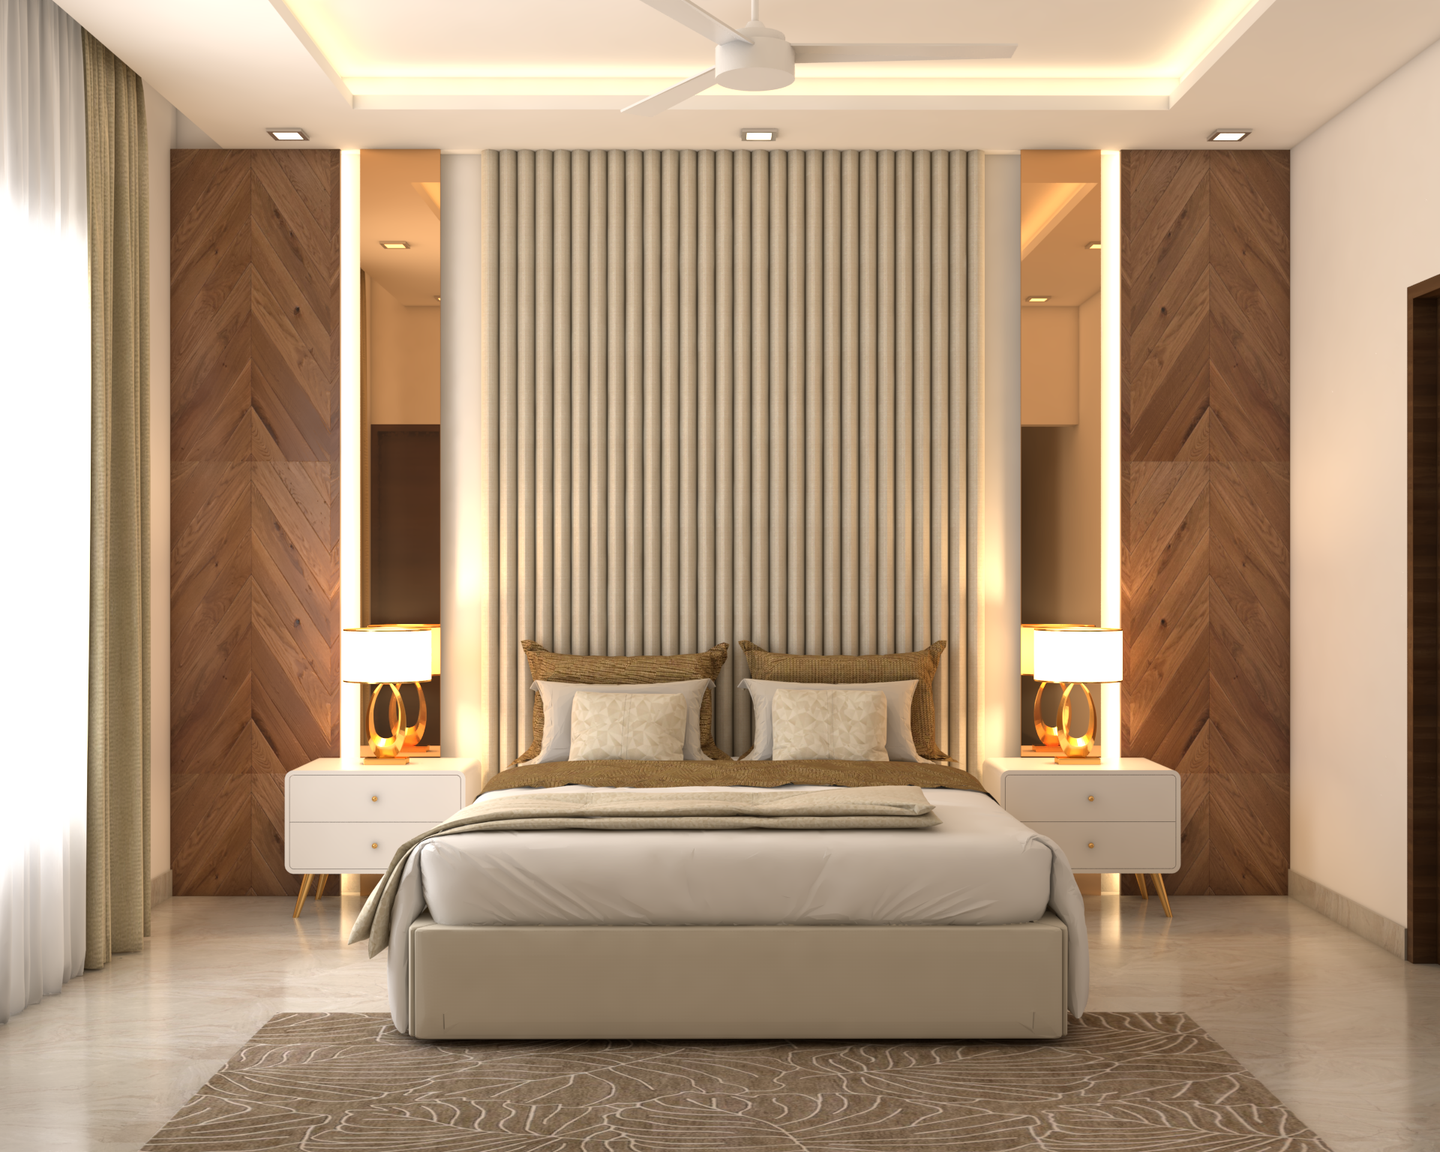 Modern Spacious Master Bedroom Design with Golden Wooden Panels - Livspace